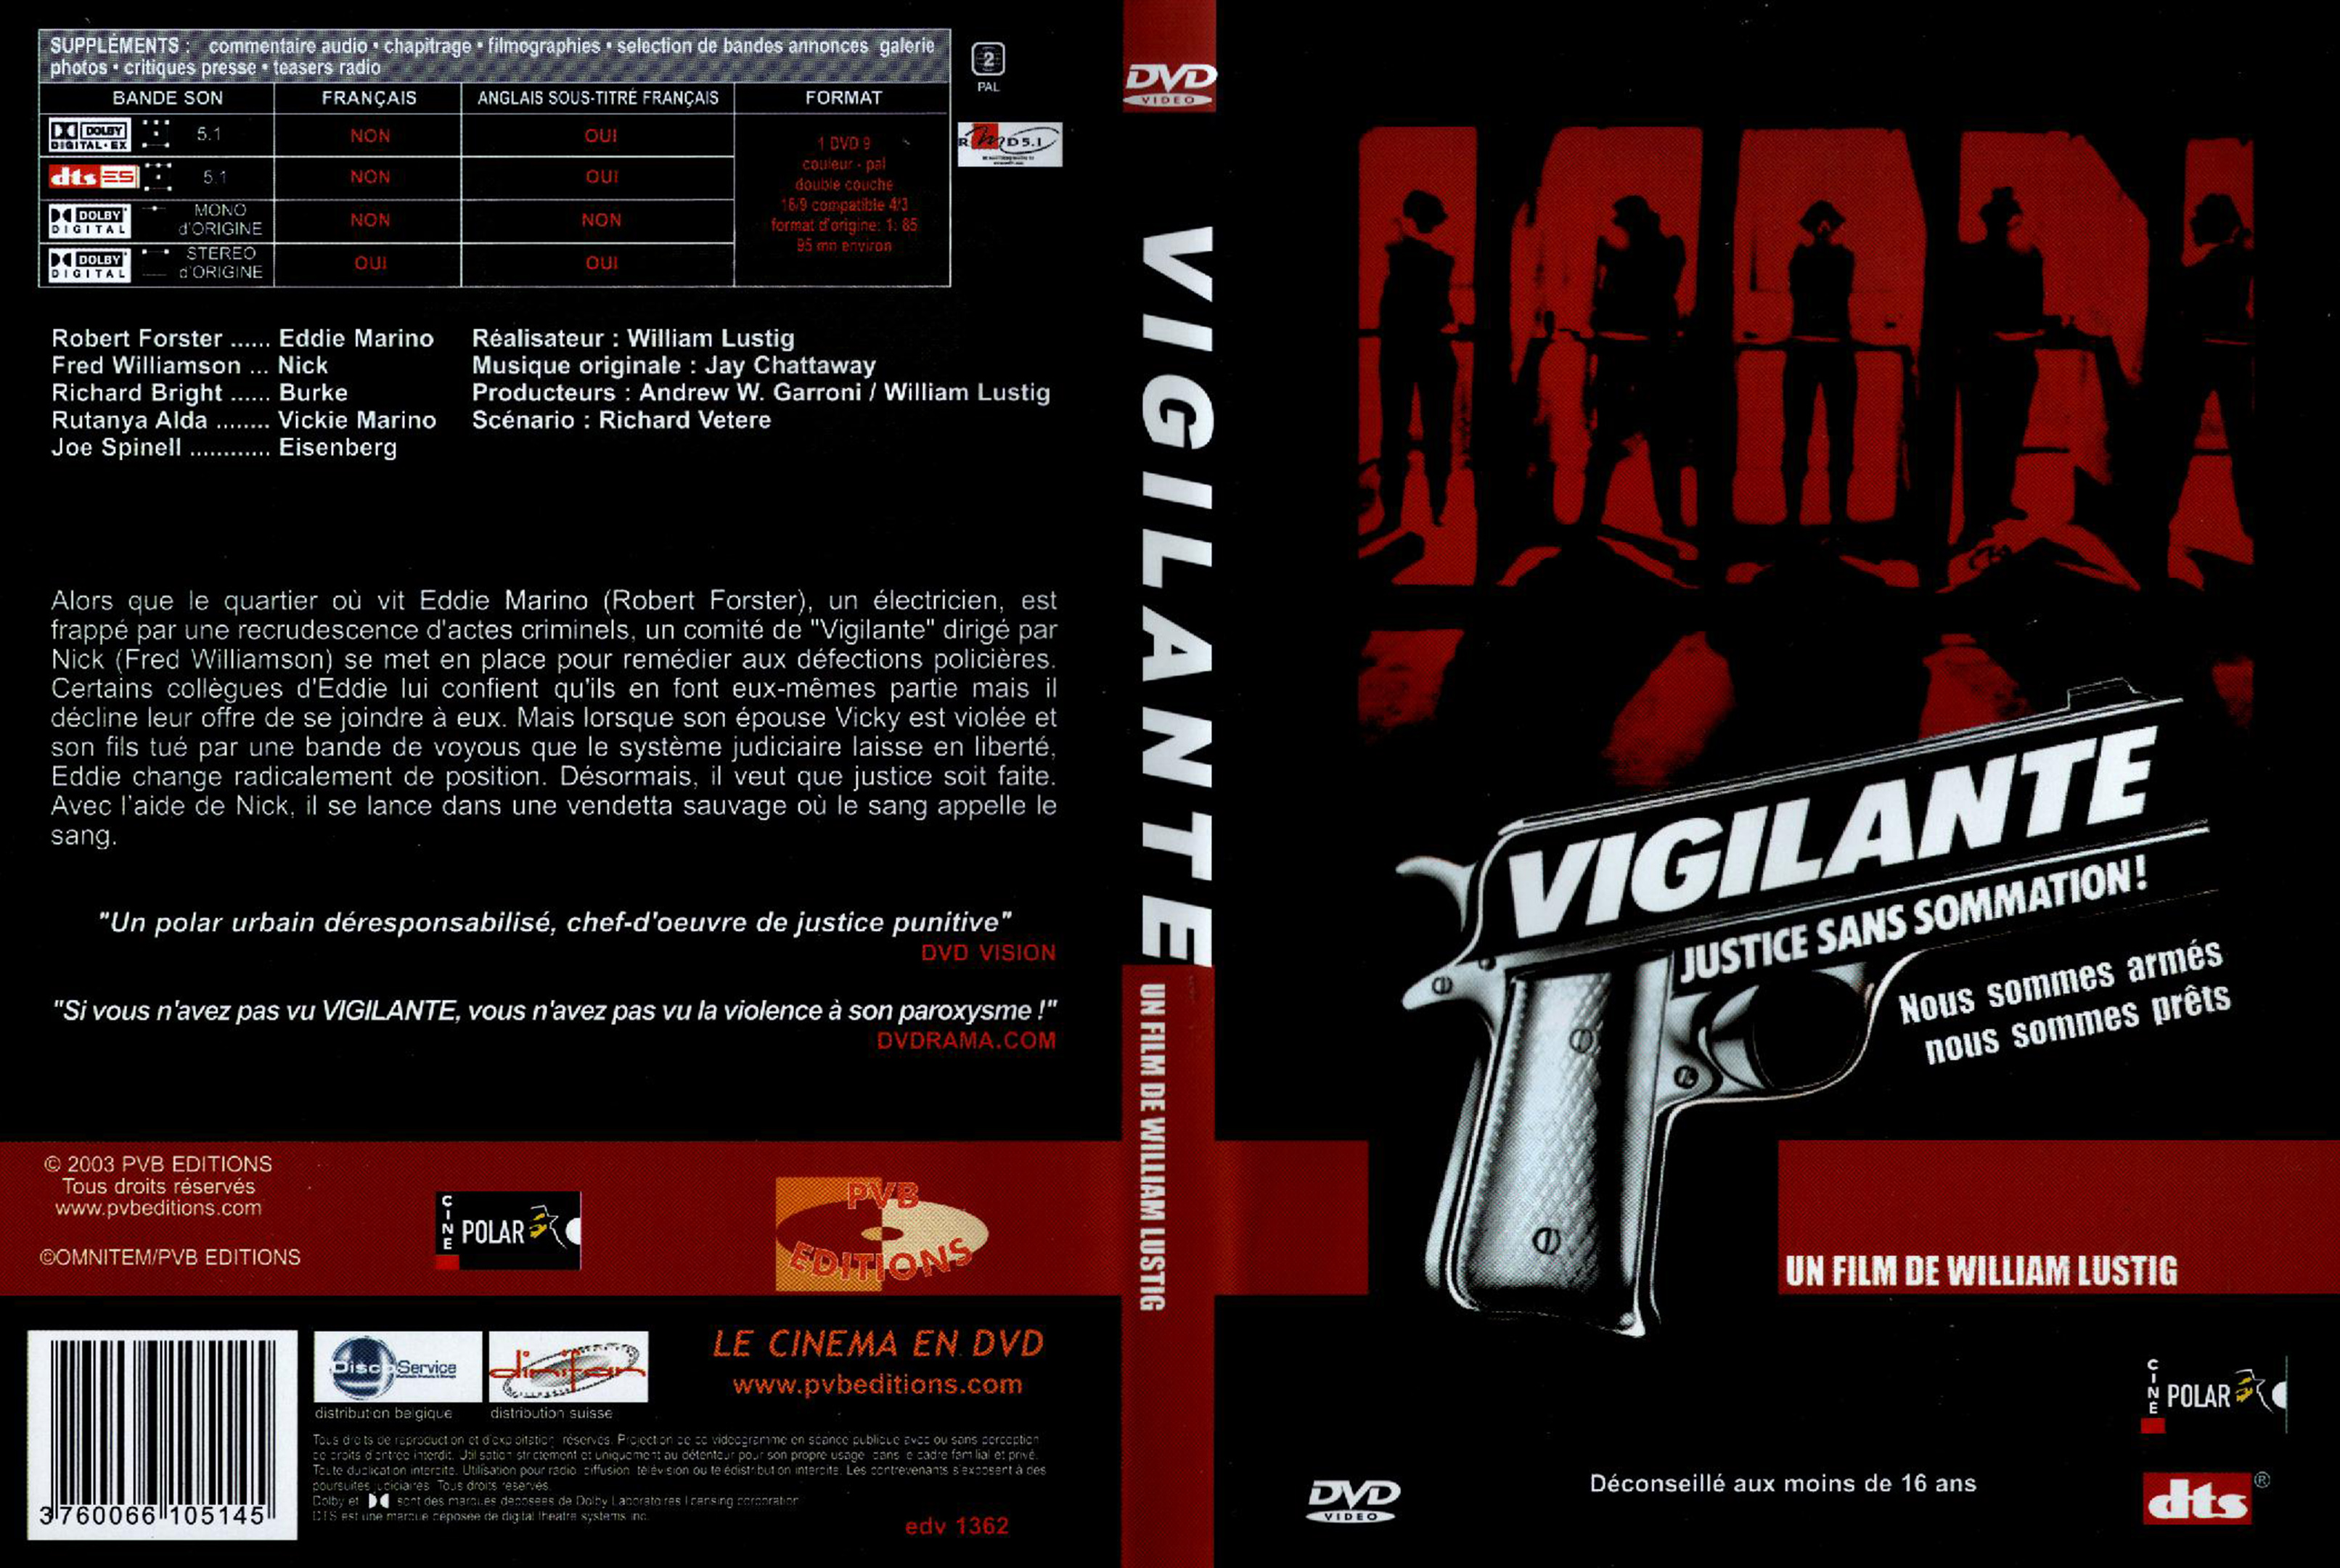 Jaquette DVD Vigilante justice sans sommation v2